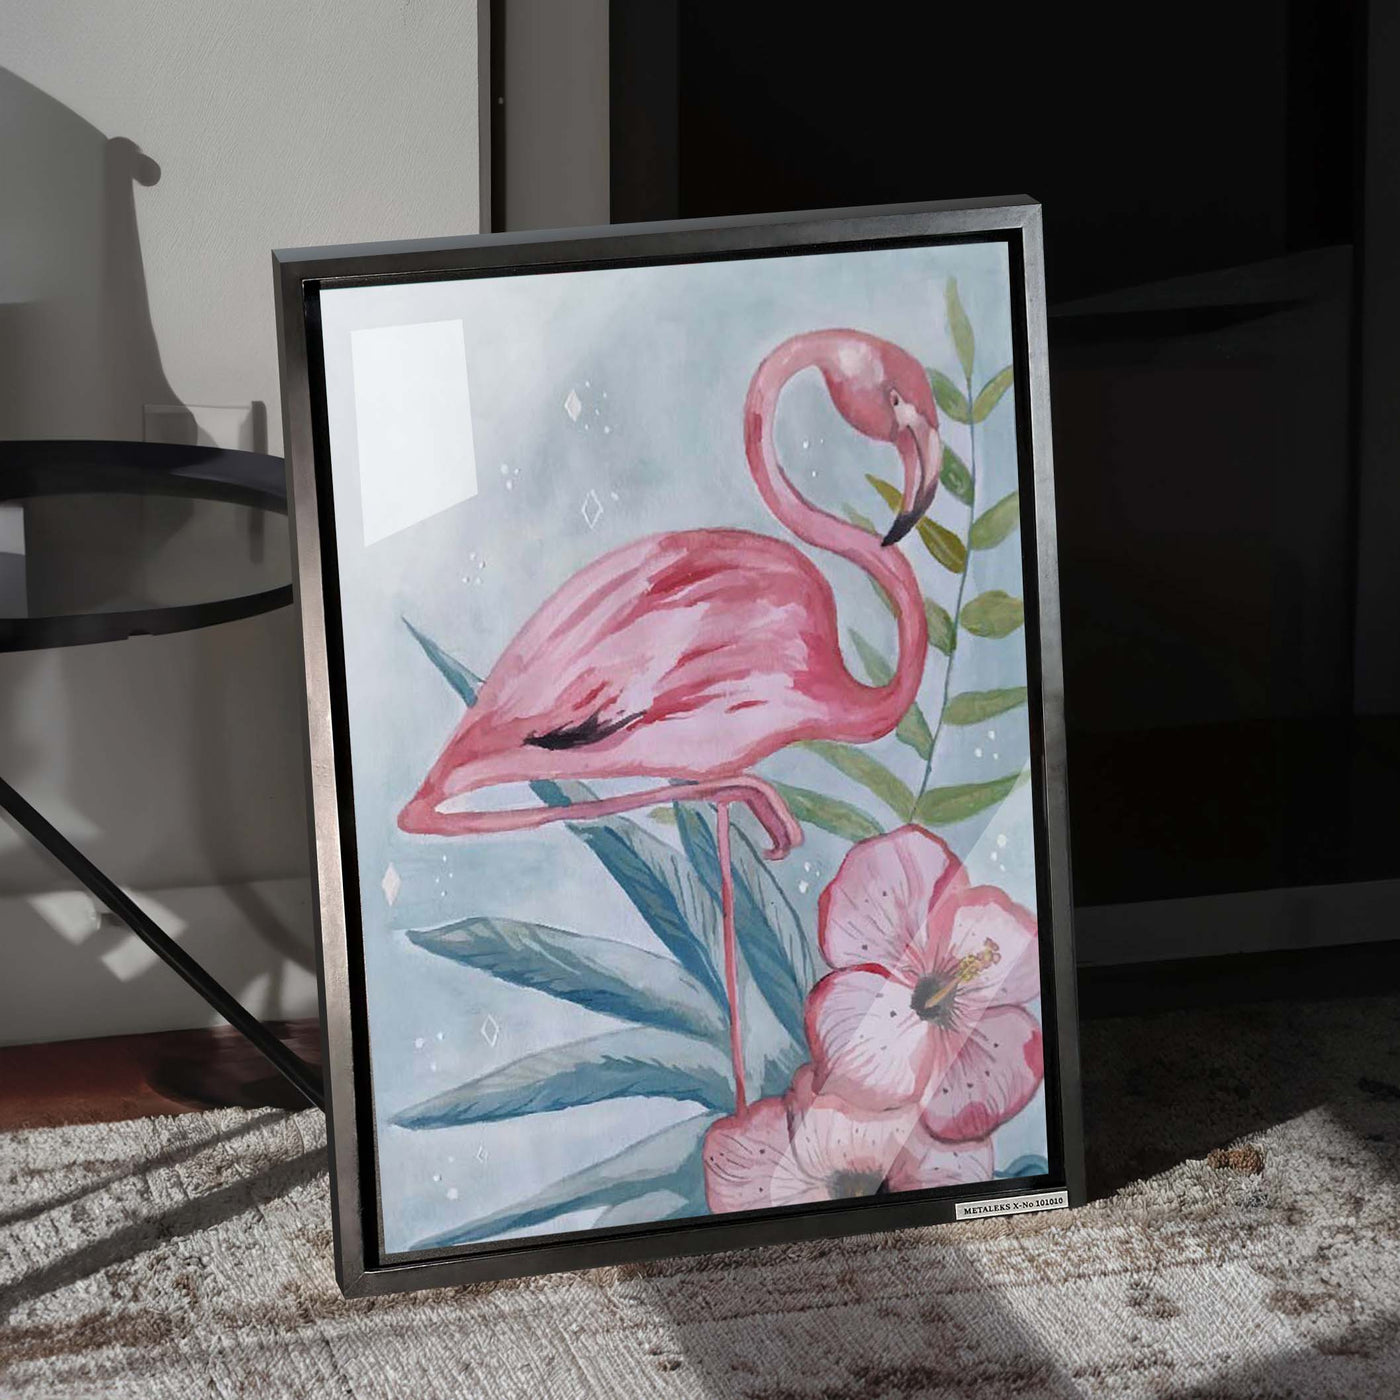 Flamingo rosa - OPERA D'ARTE DI katysart.artis